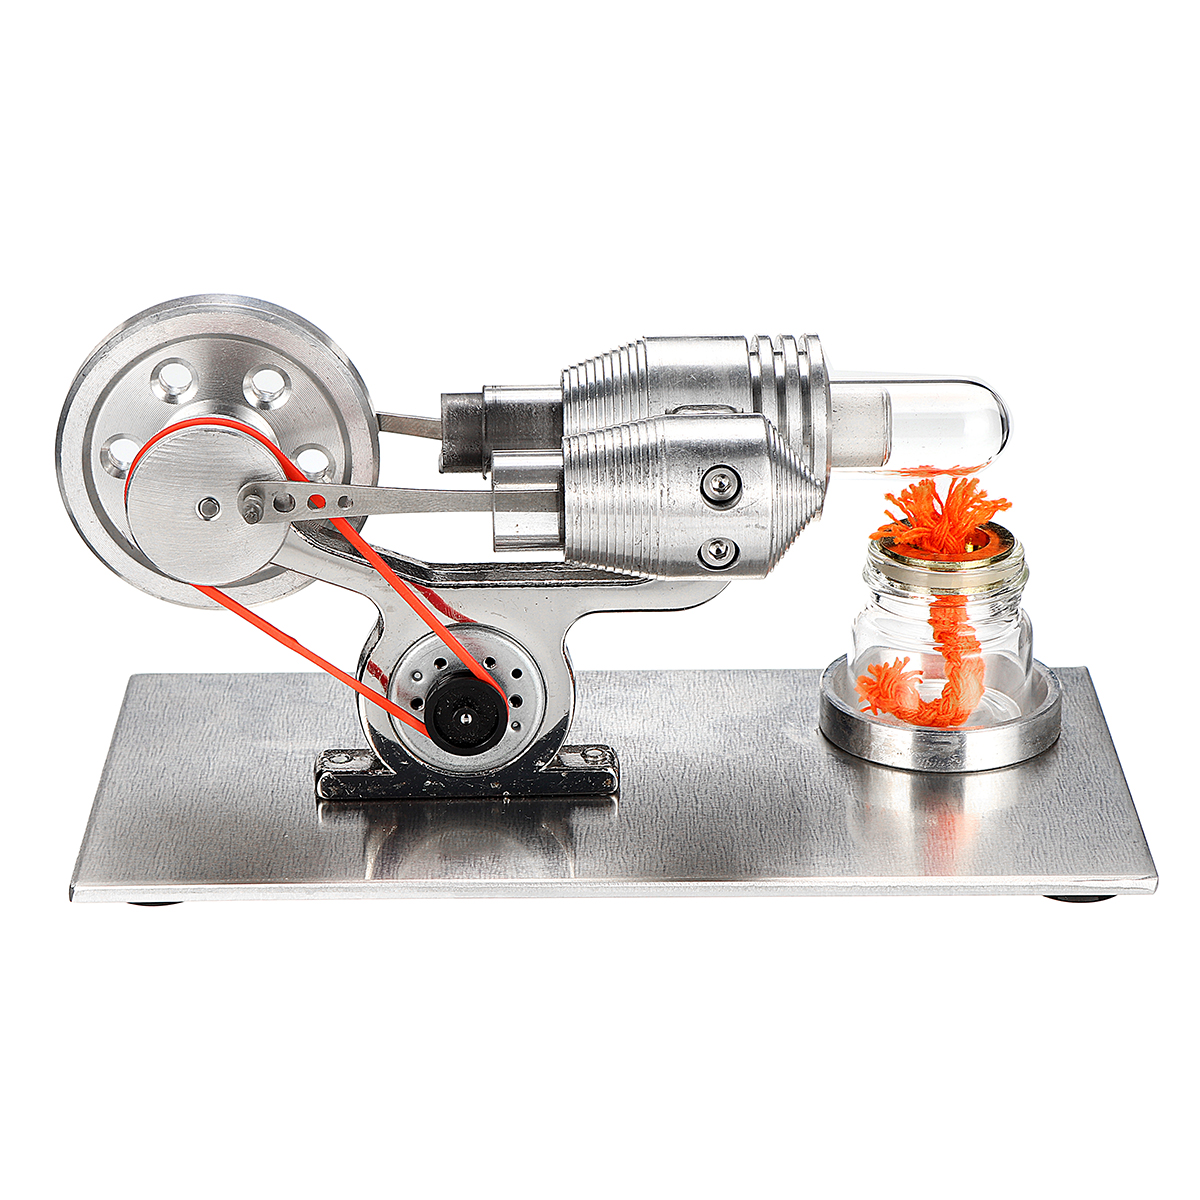 STEM Stainless Mini Hot Air Stirling Engine Motor Model Educational Toy Kit 114